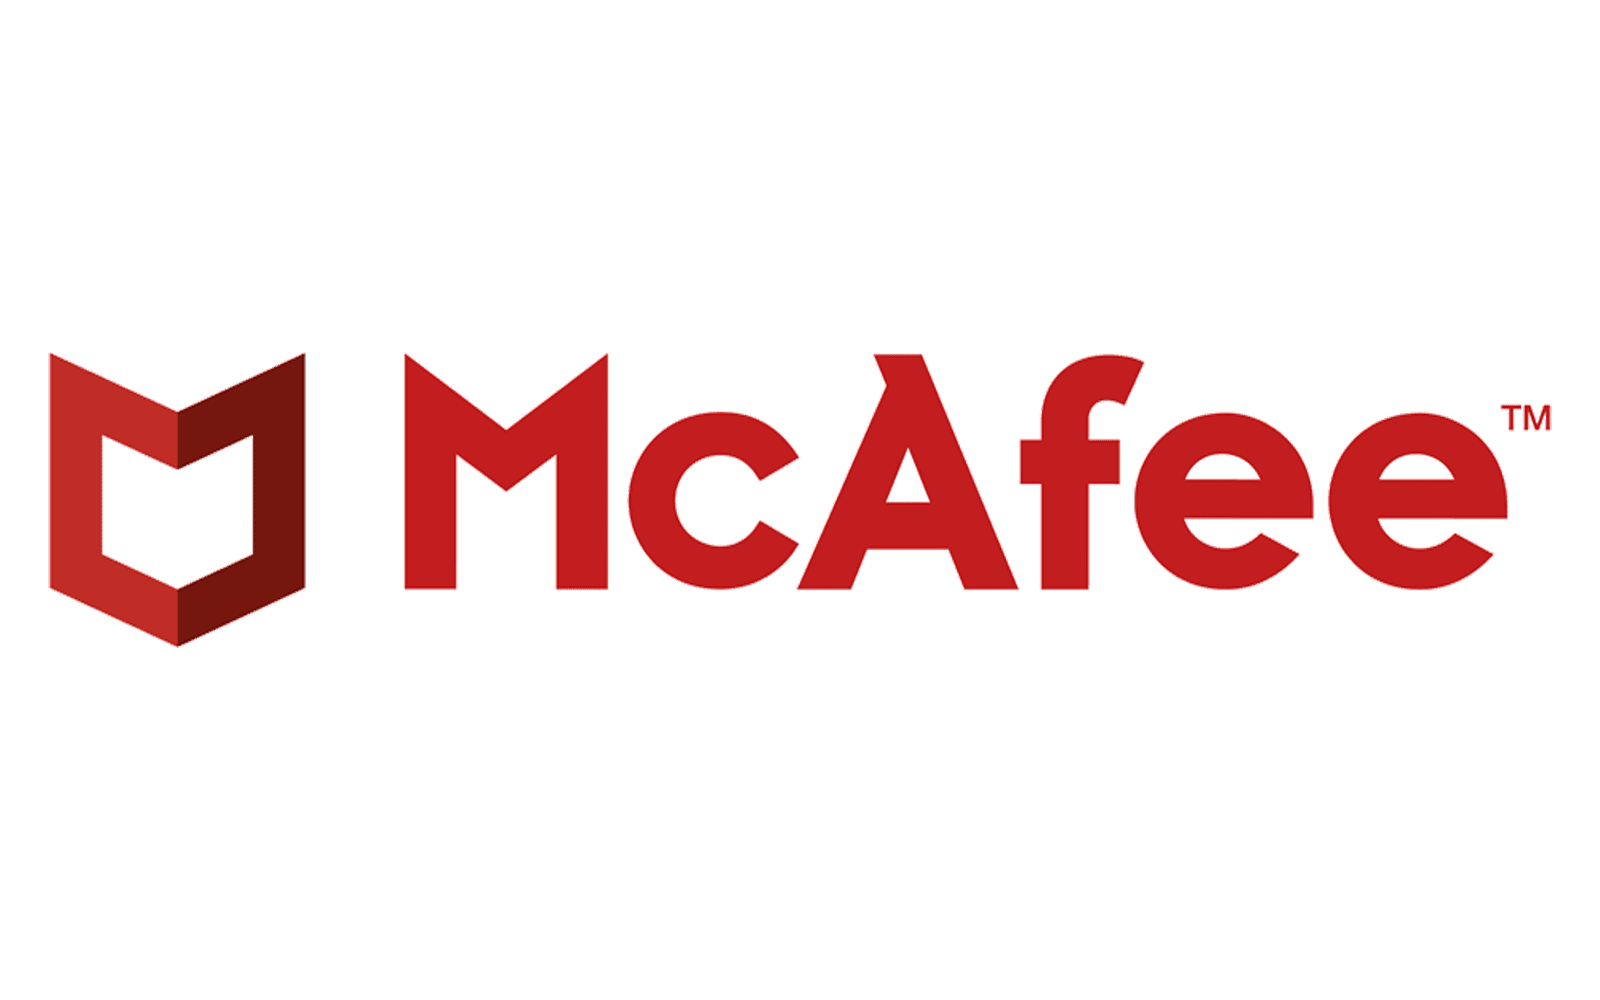 Brand: McAfee